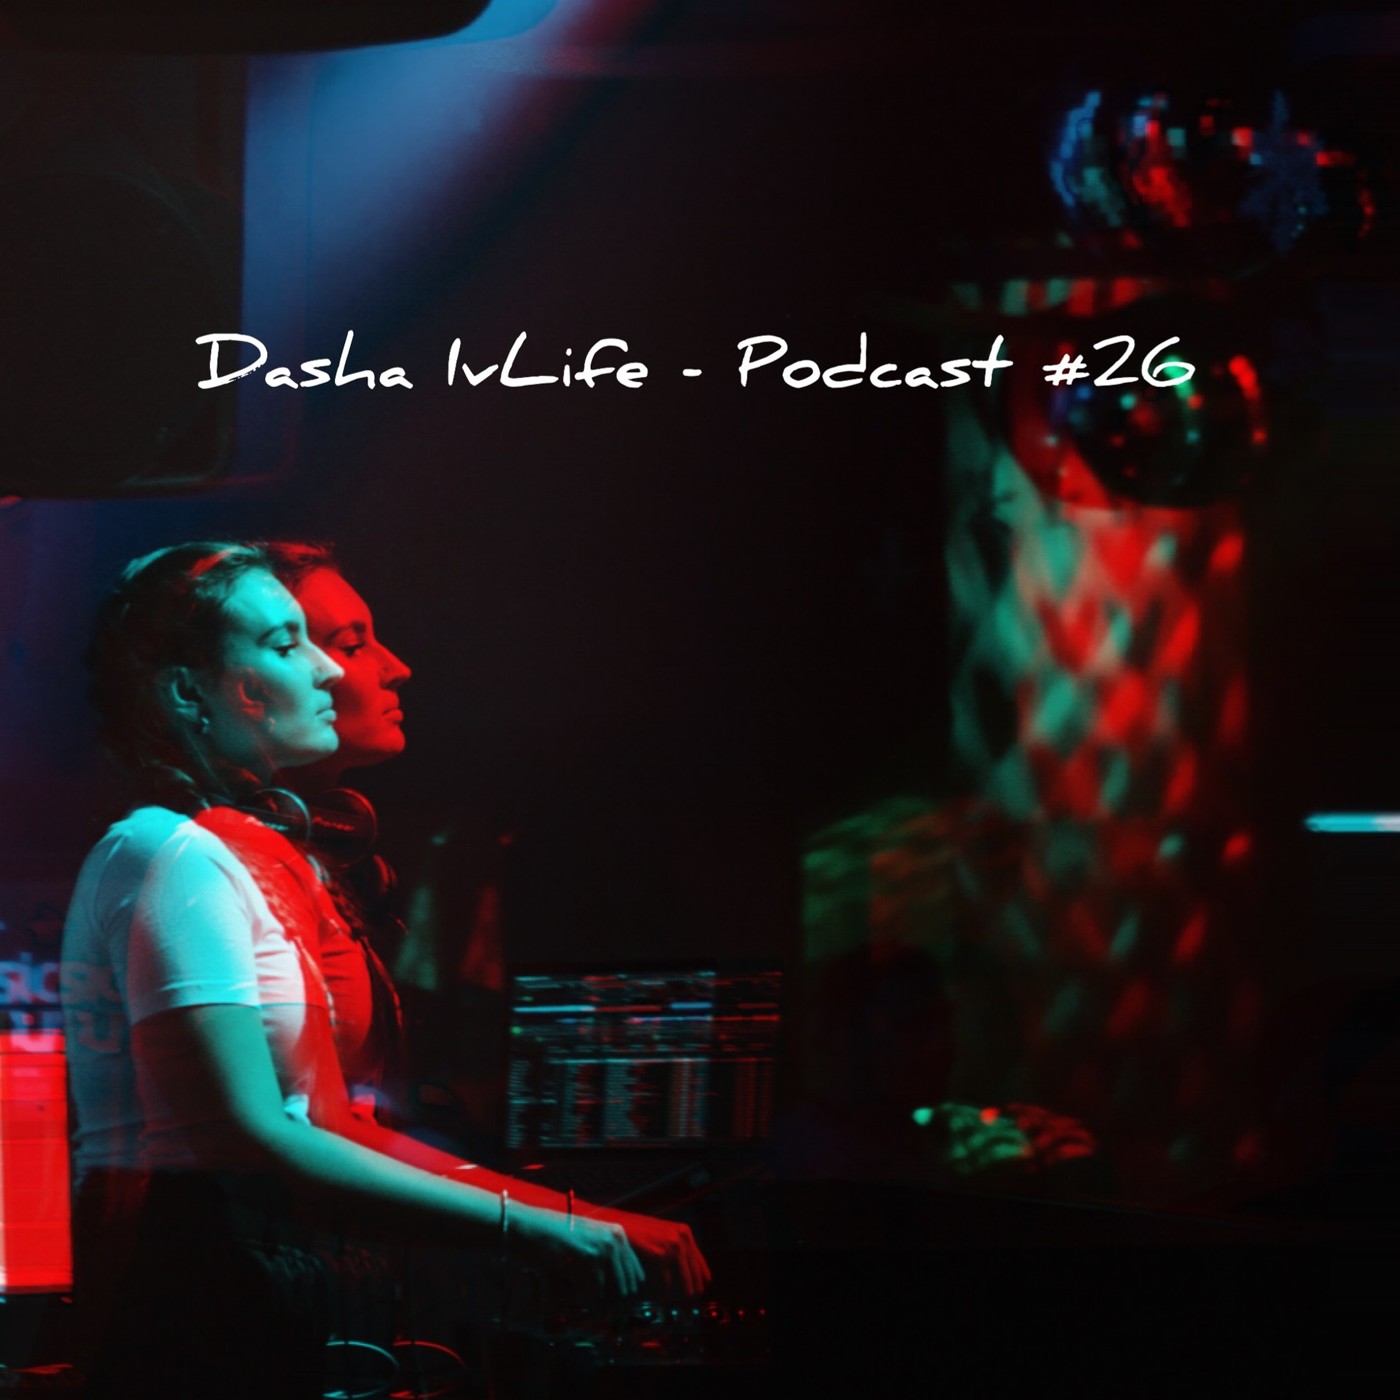 DJ Dasha Ivlife - Podcast #26